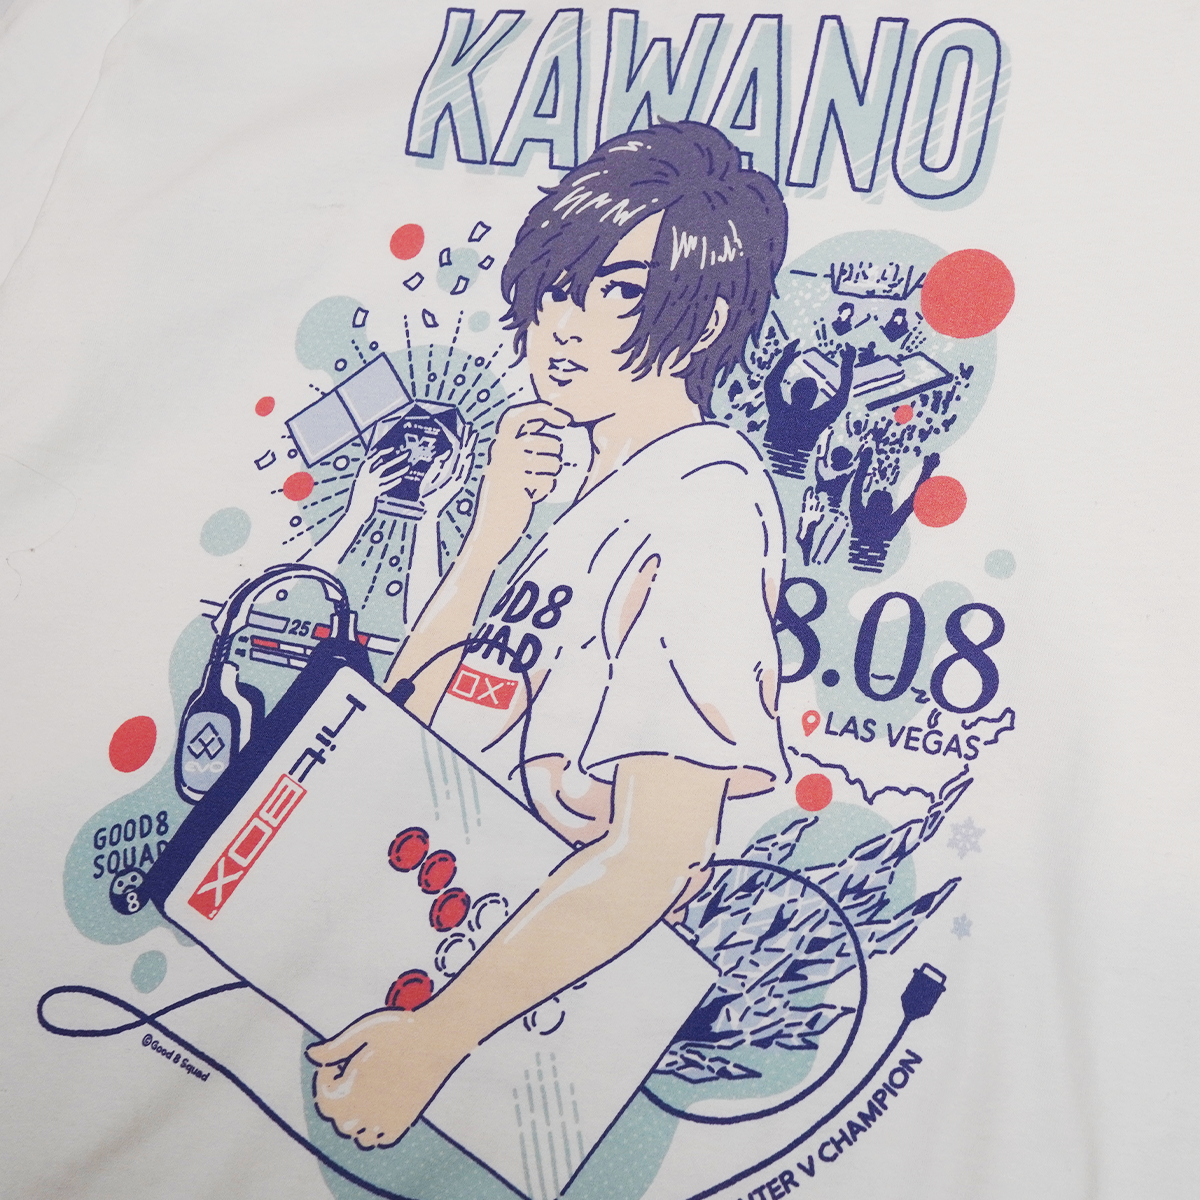 KAWANO Memorial Tshirt